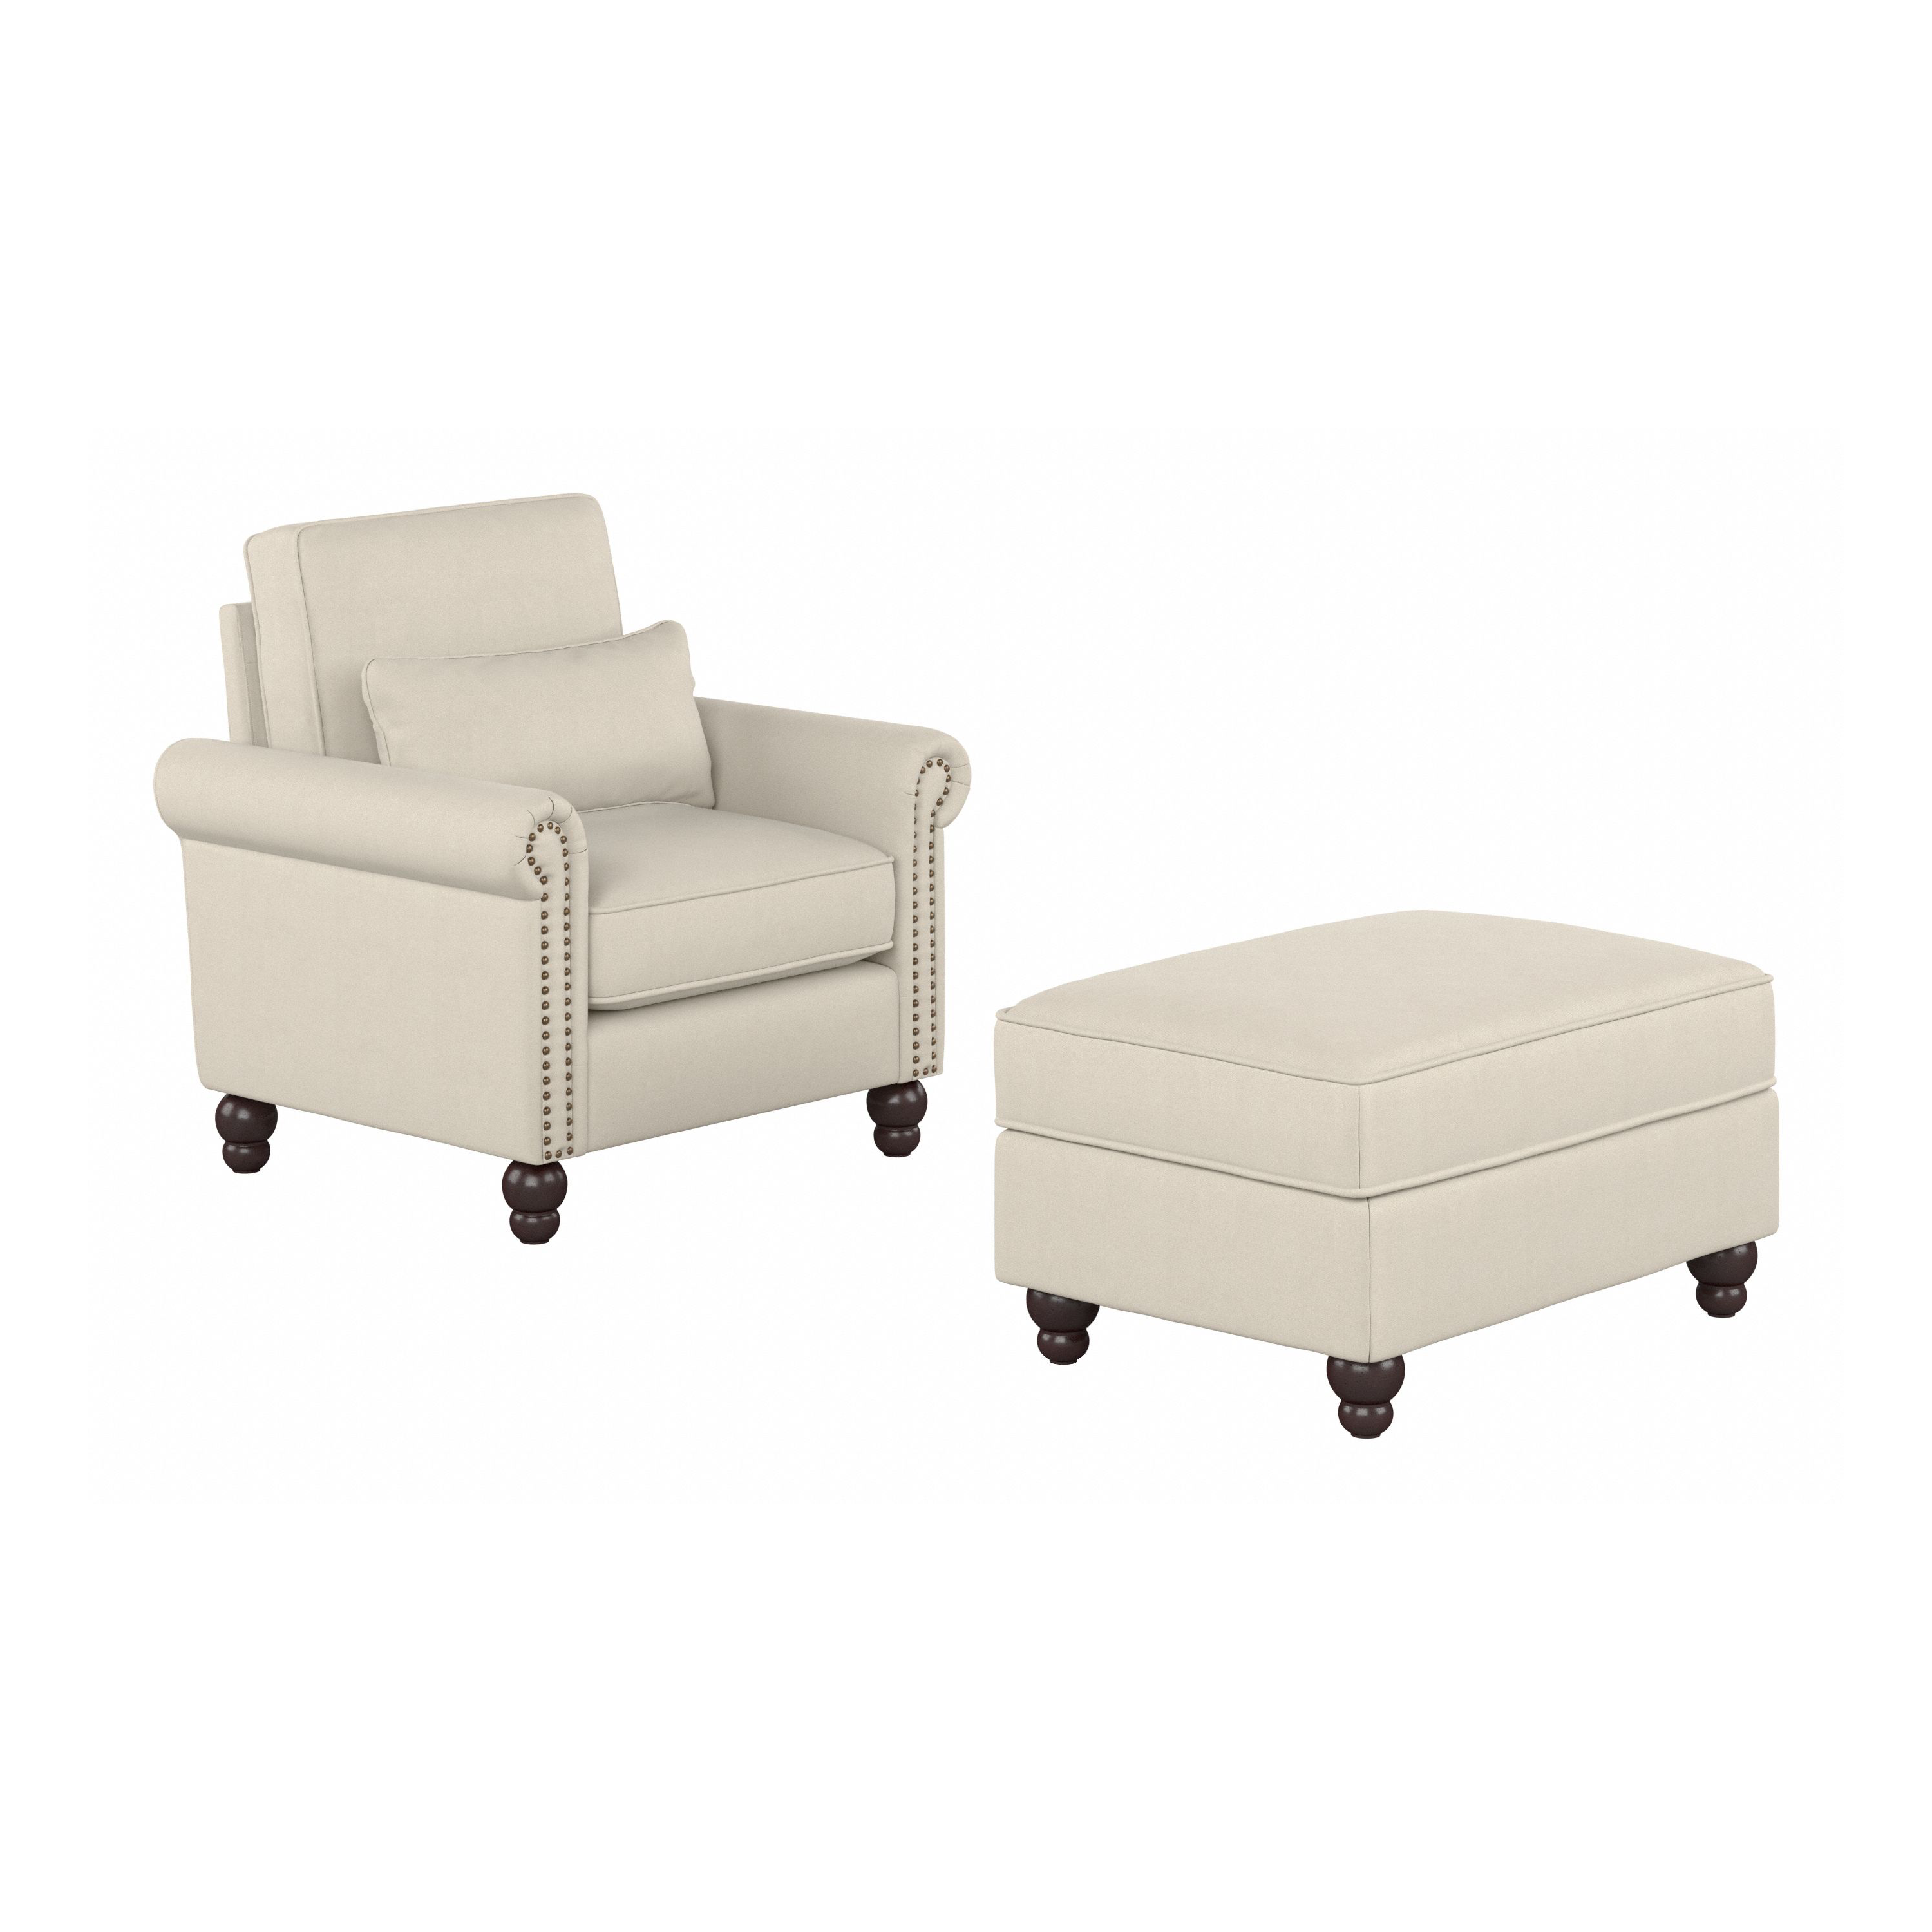 Shop Bush Furniture Coventry Accent Chair with Ottoman Set 02 CVN010CRH #color_cream herringbone fabric